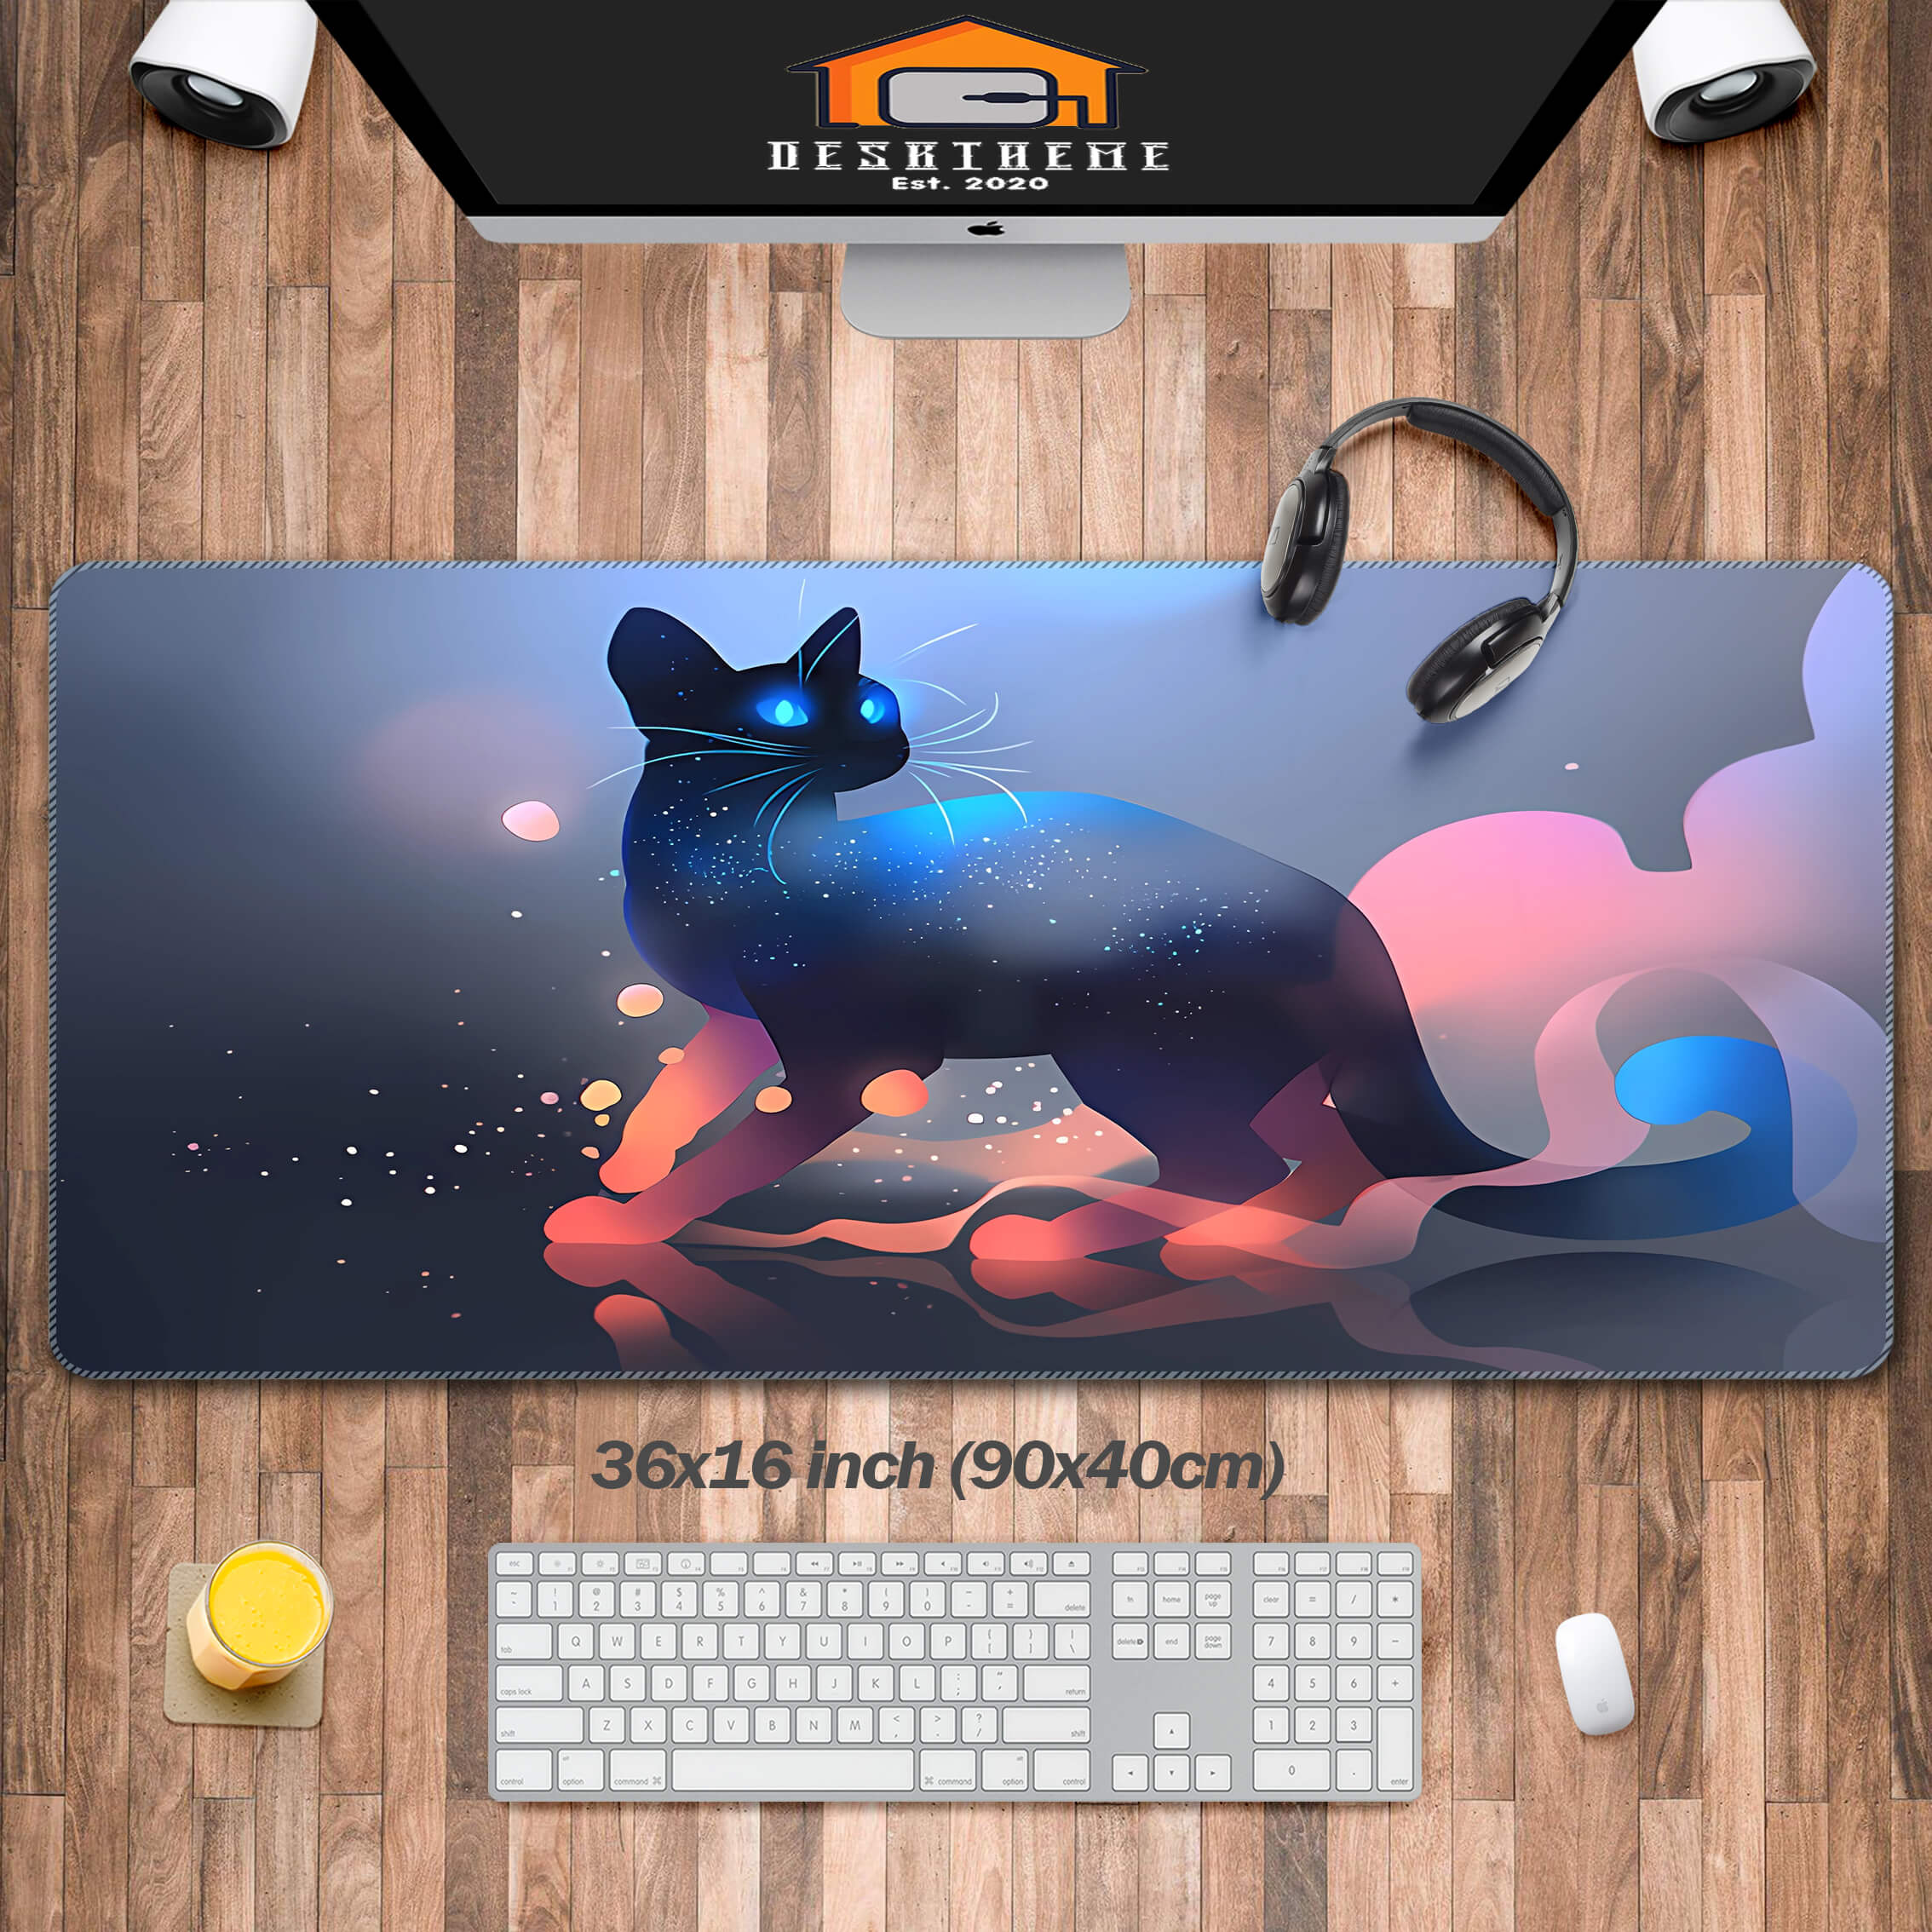 Nebula Cat Desk Pad Large